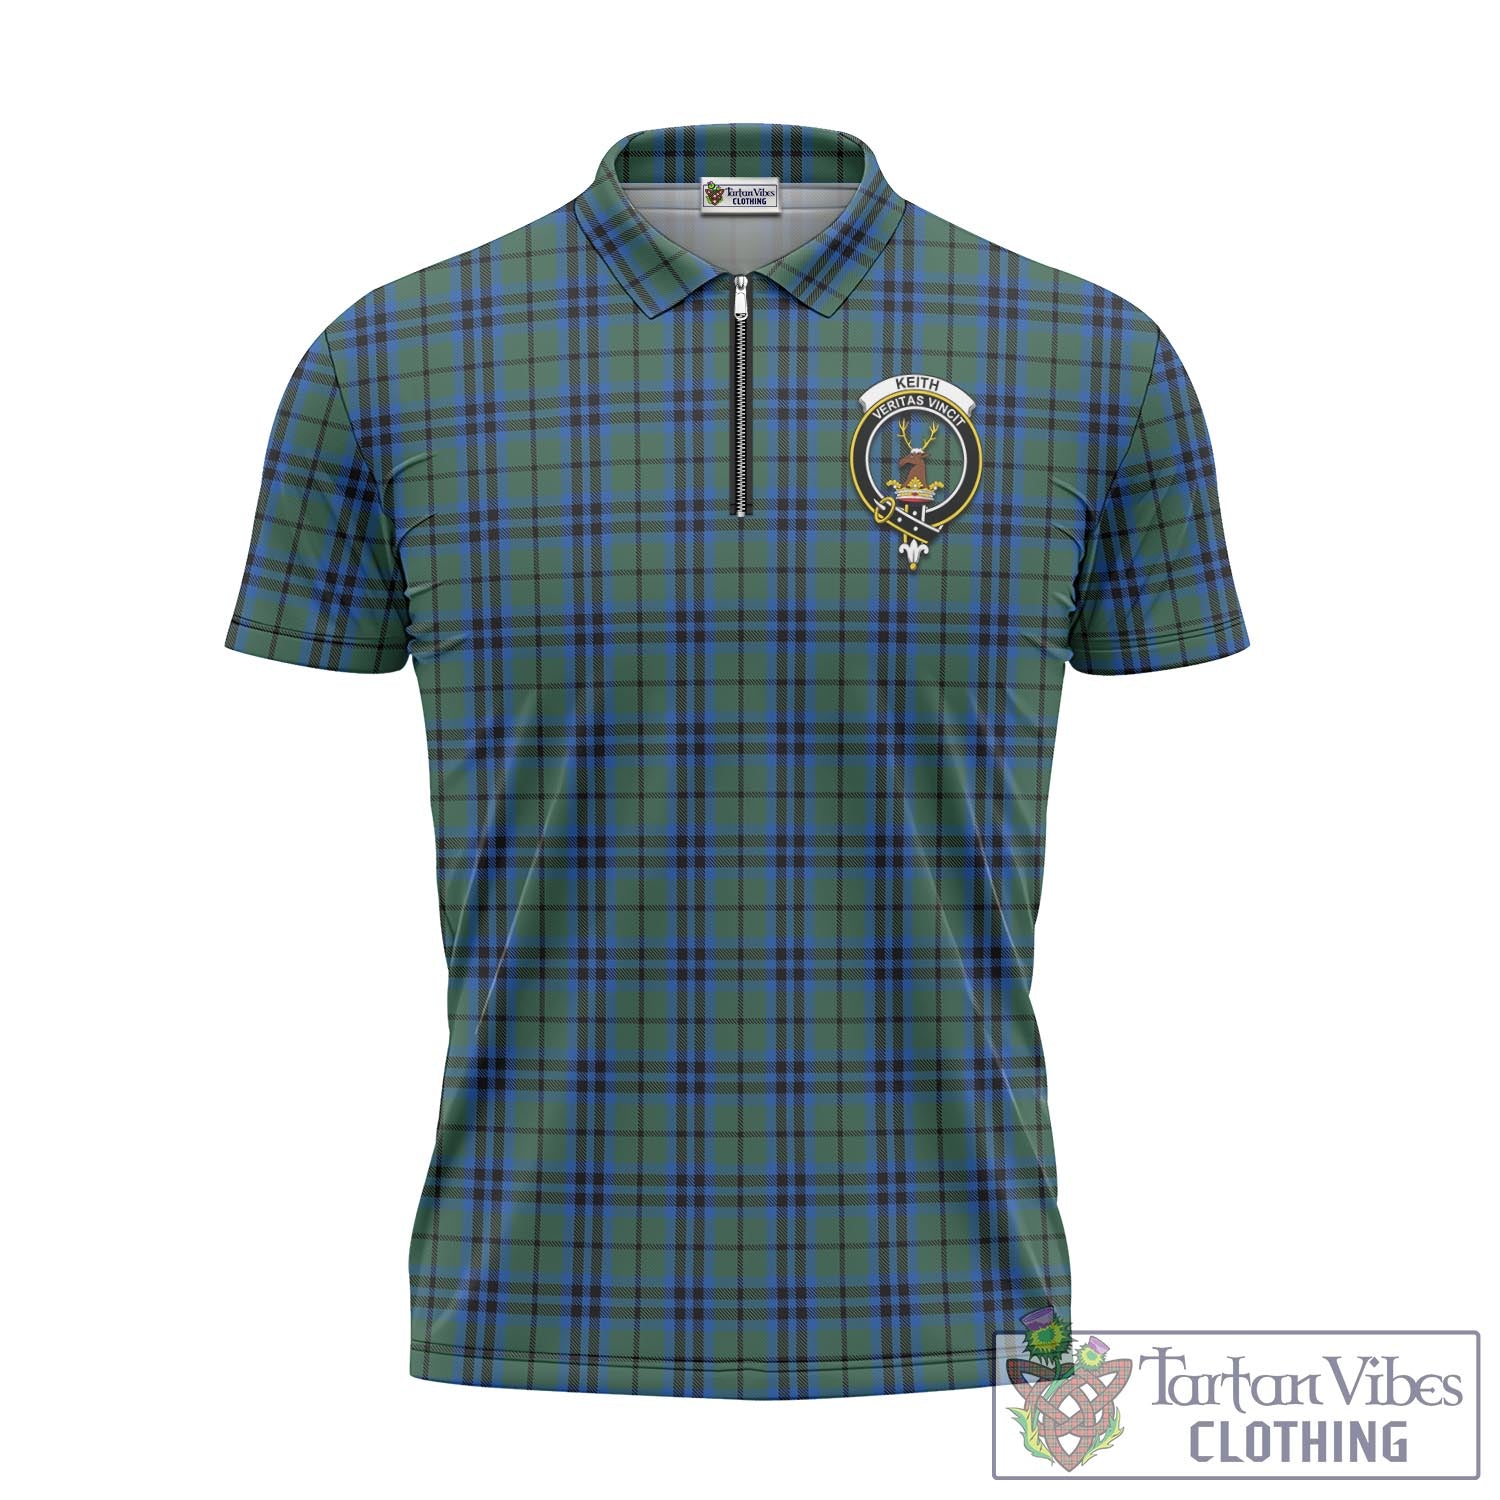 Tartan Vibes Clothing Keith Tartan Zipper Polo Shirt with Family Crest